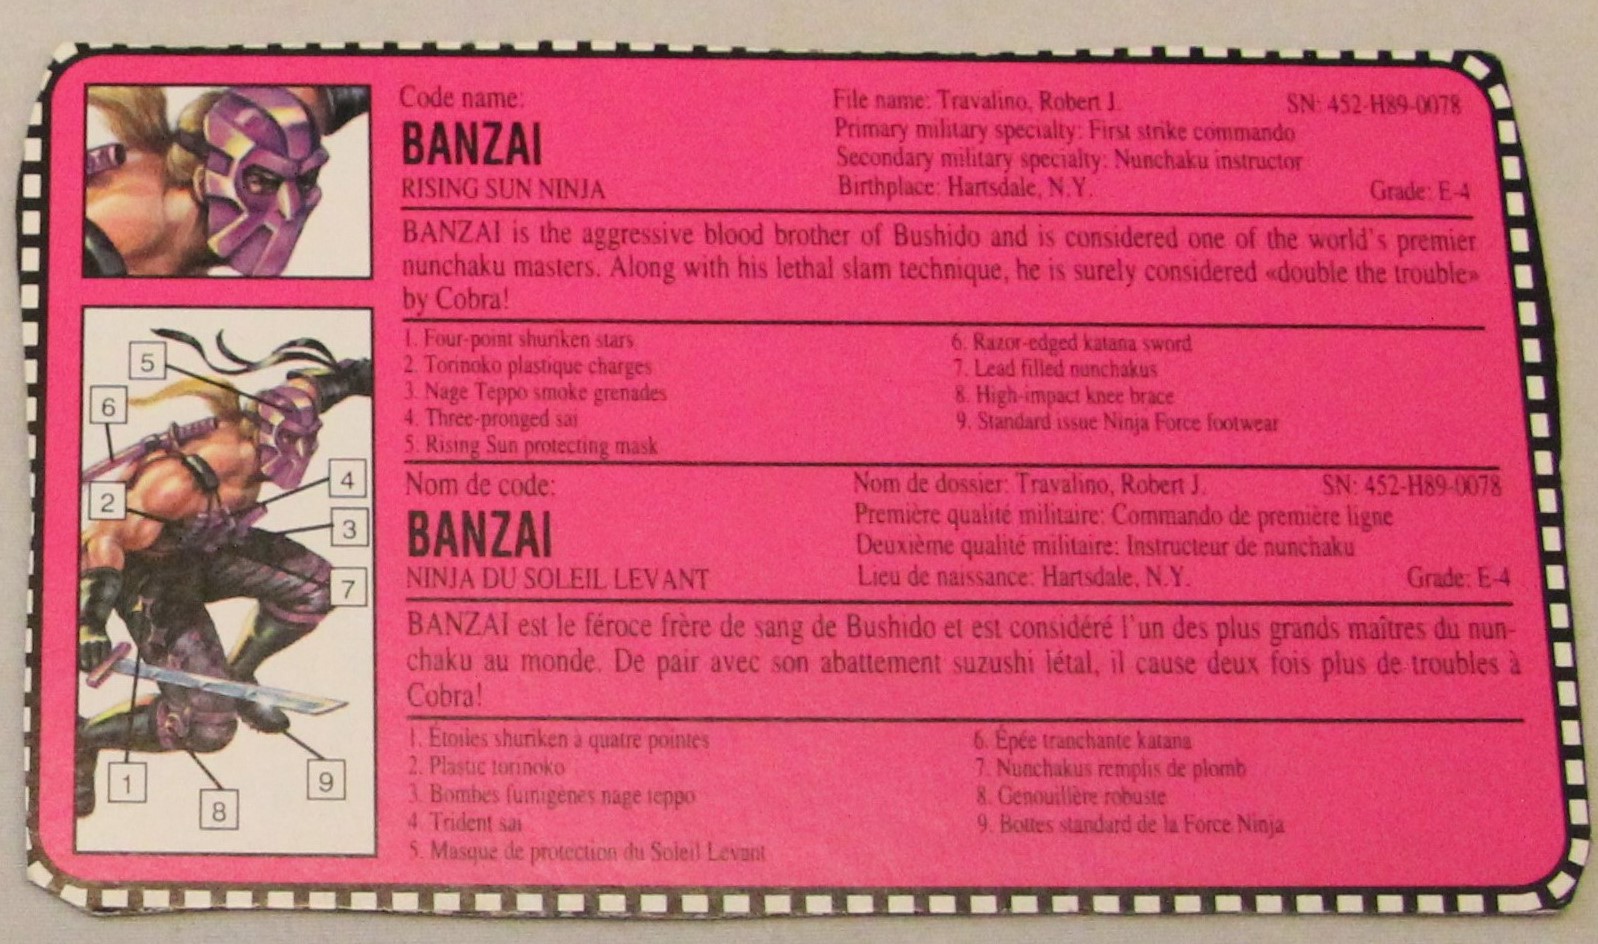 1993 banzi file card